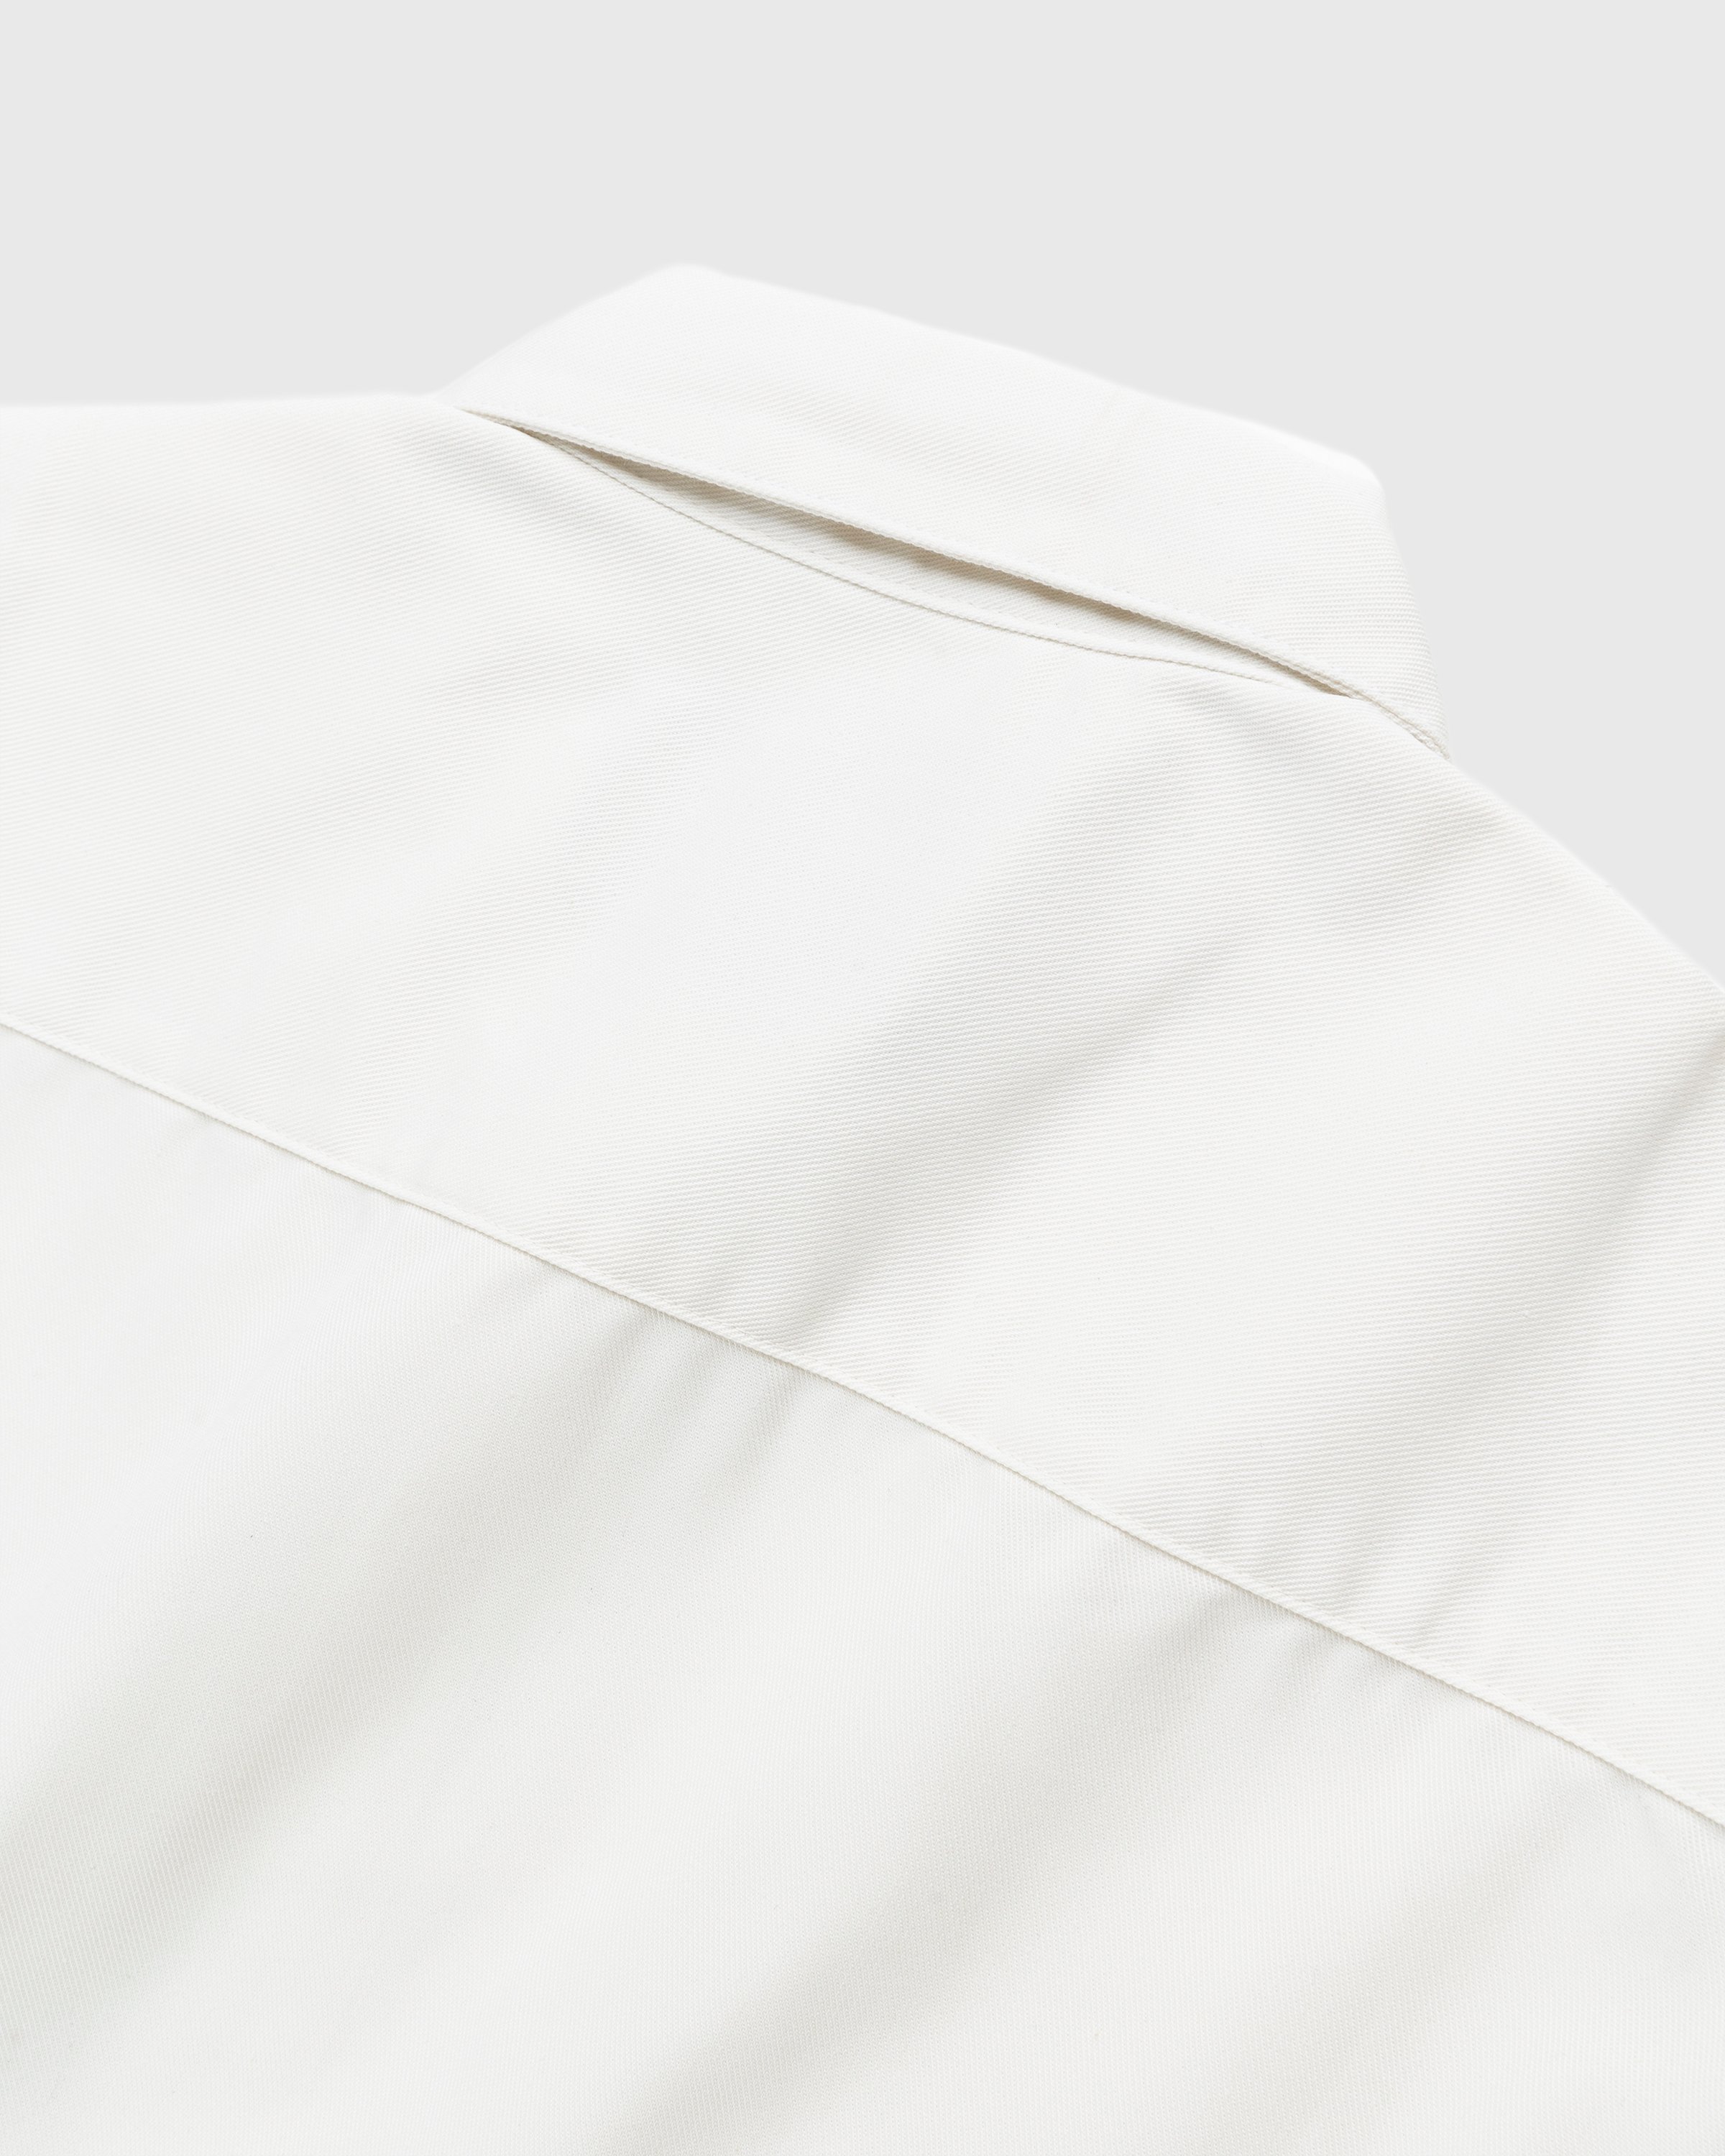 Carhartt WIP - Master Shirt Wax - Clothing - White - Image 3